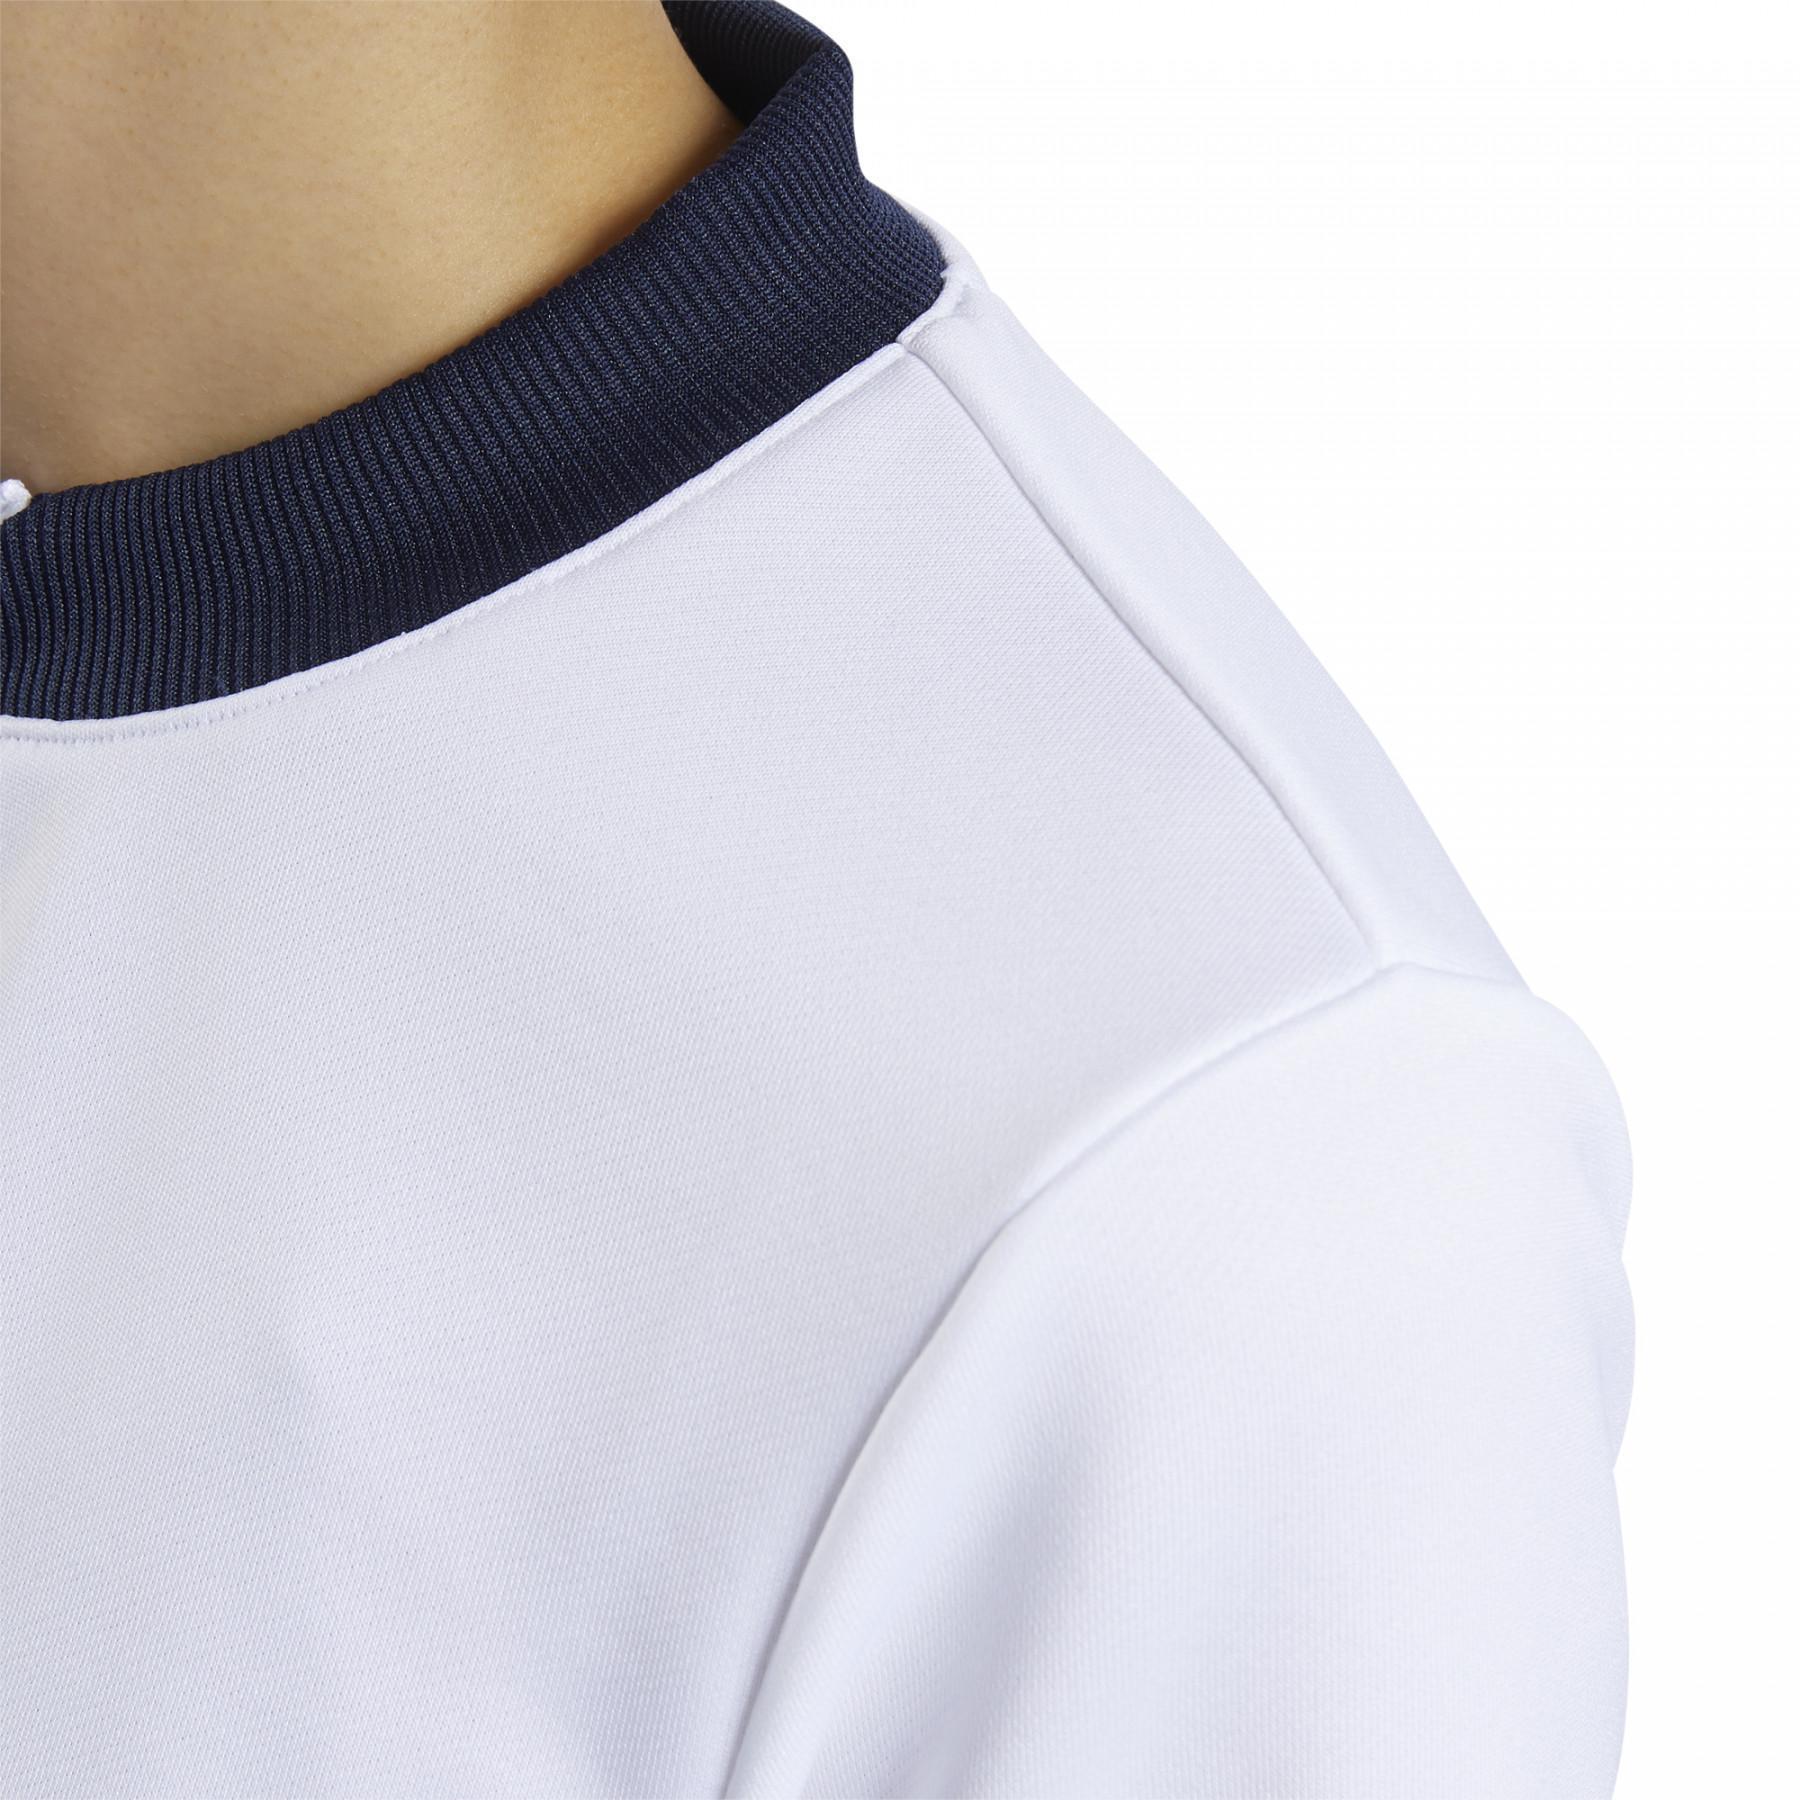 T-shirt femme Reebok Classics Cropped V-neck